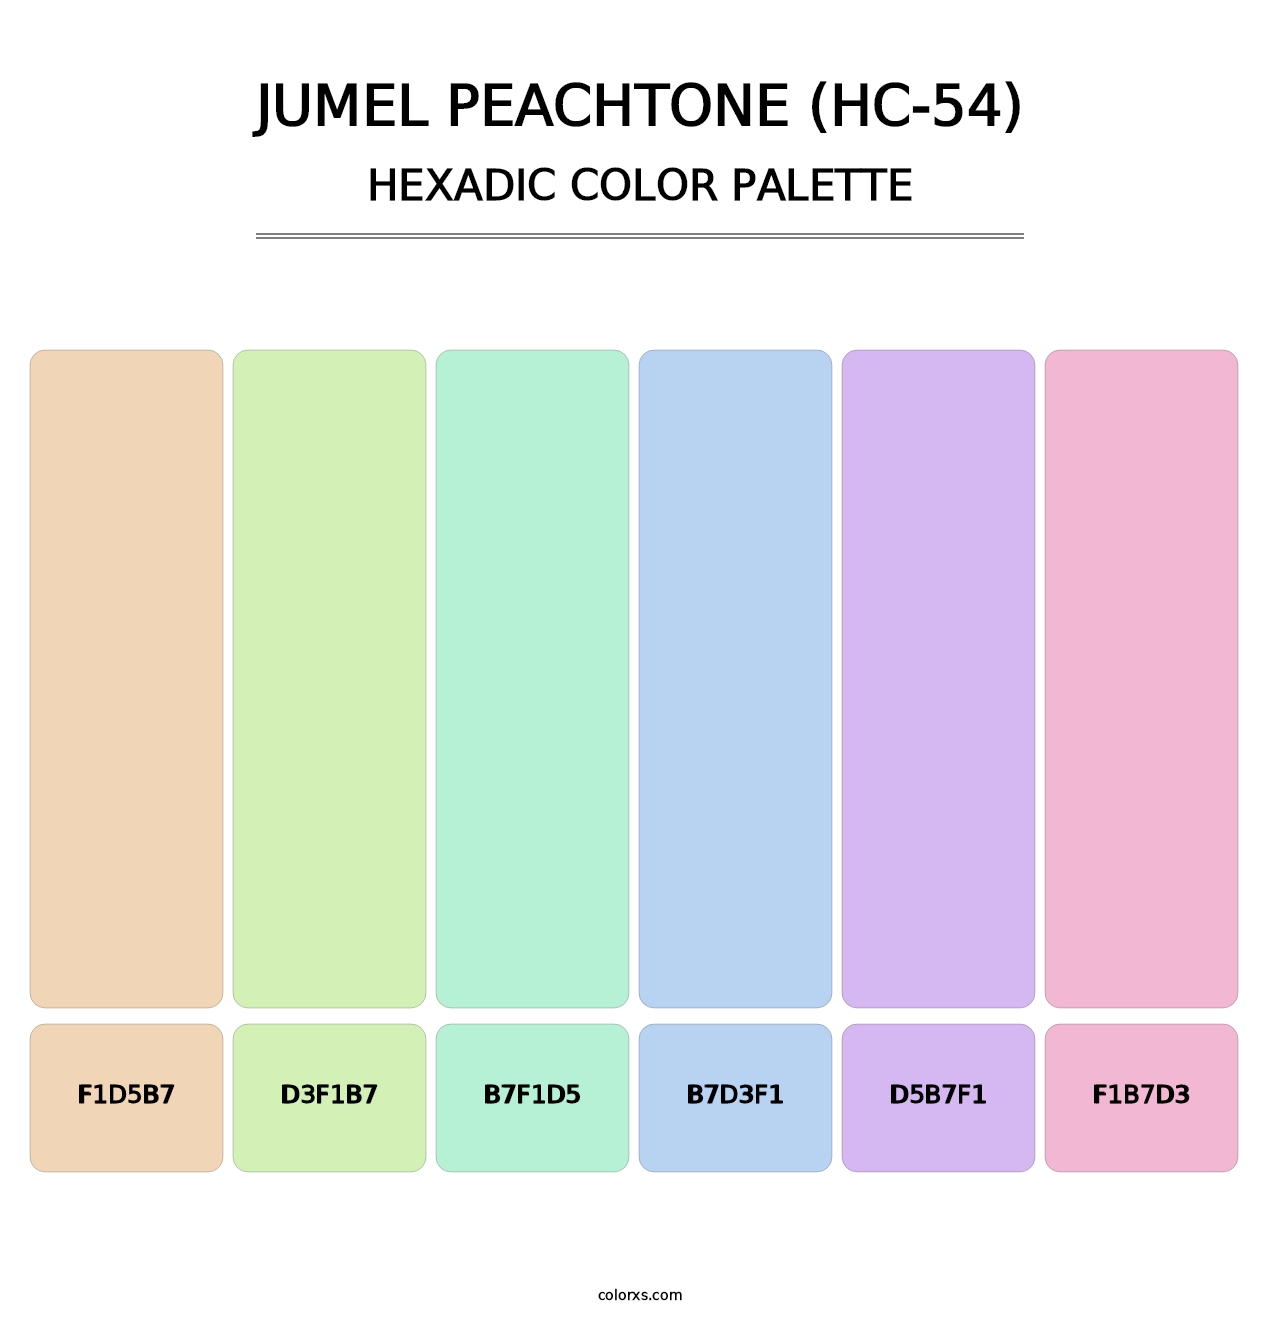 Jumel Peachtone (HC-54) - Hexadic Color Palette